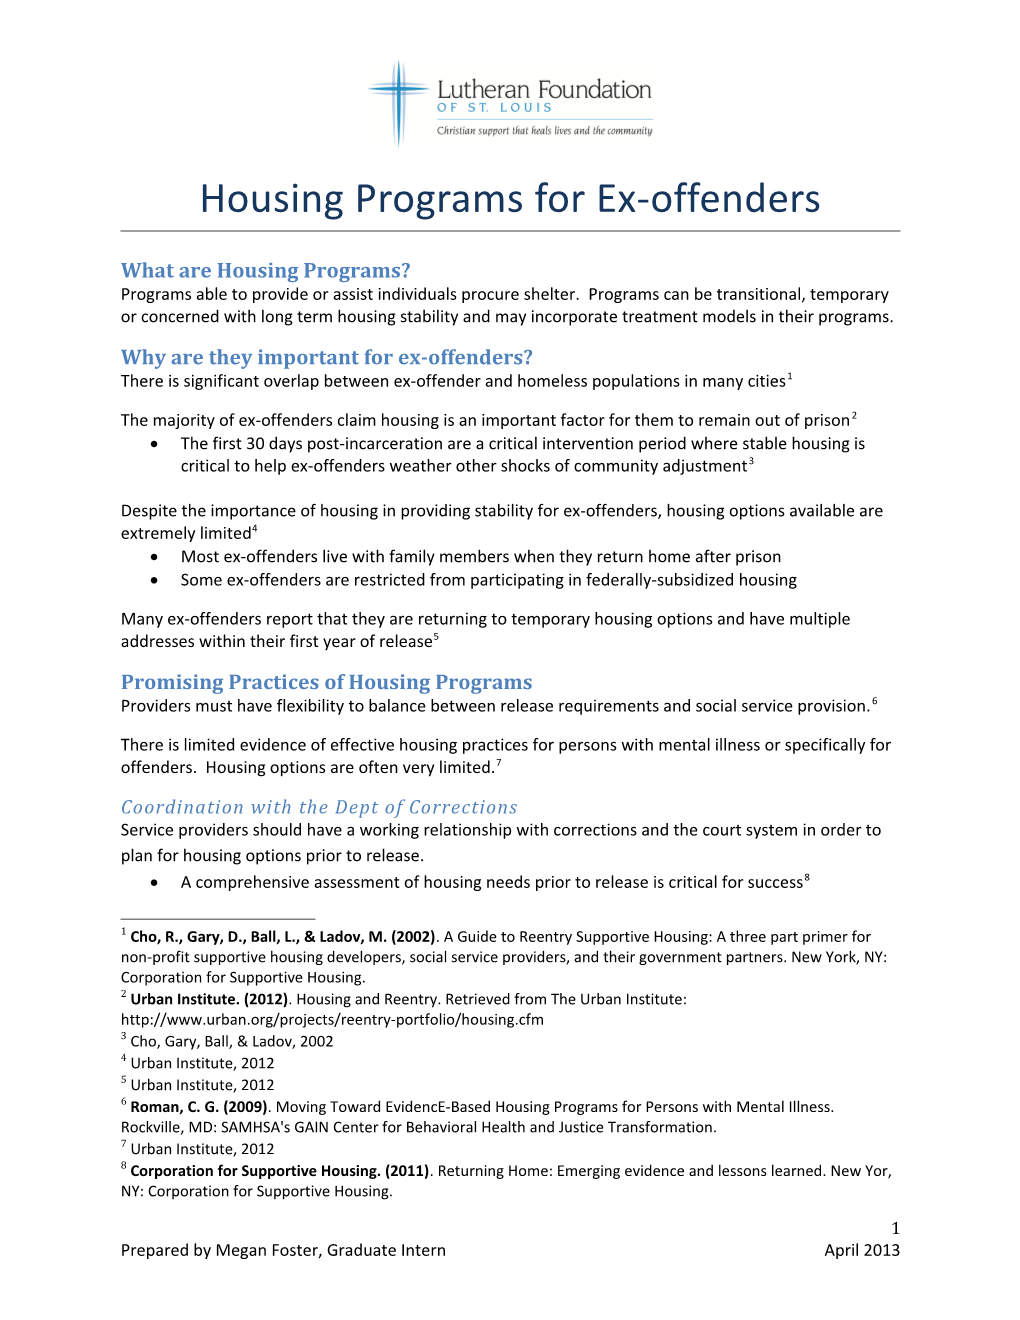 Housing Programs for Ex-Offenders